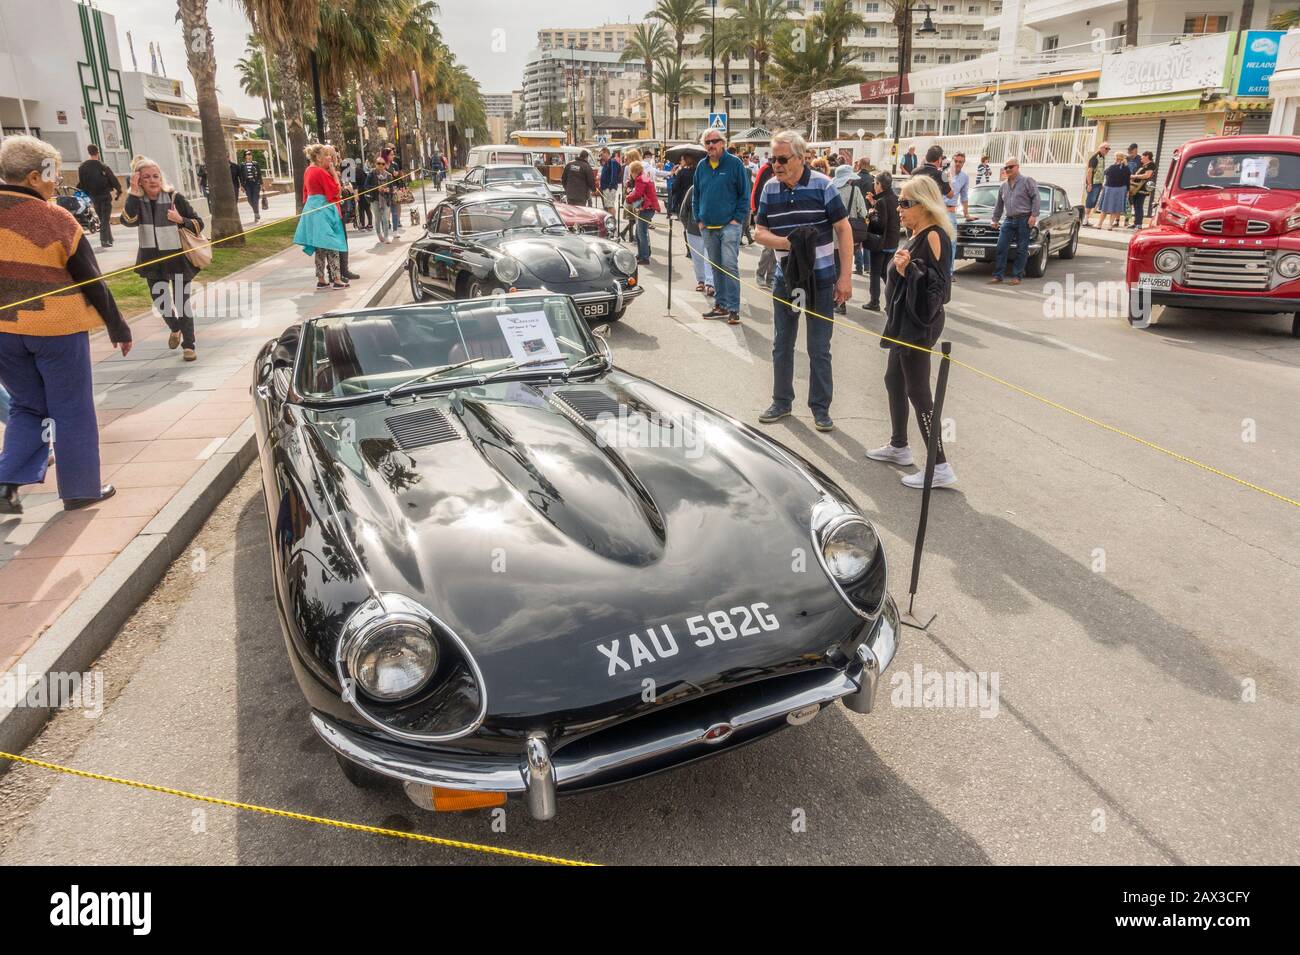 Jaguar E Type on display during street festival. Torremolinos, Spain. Stock Photo